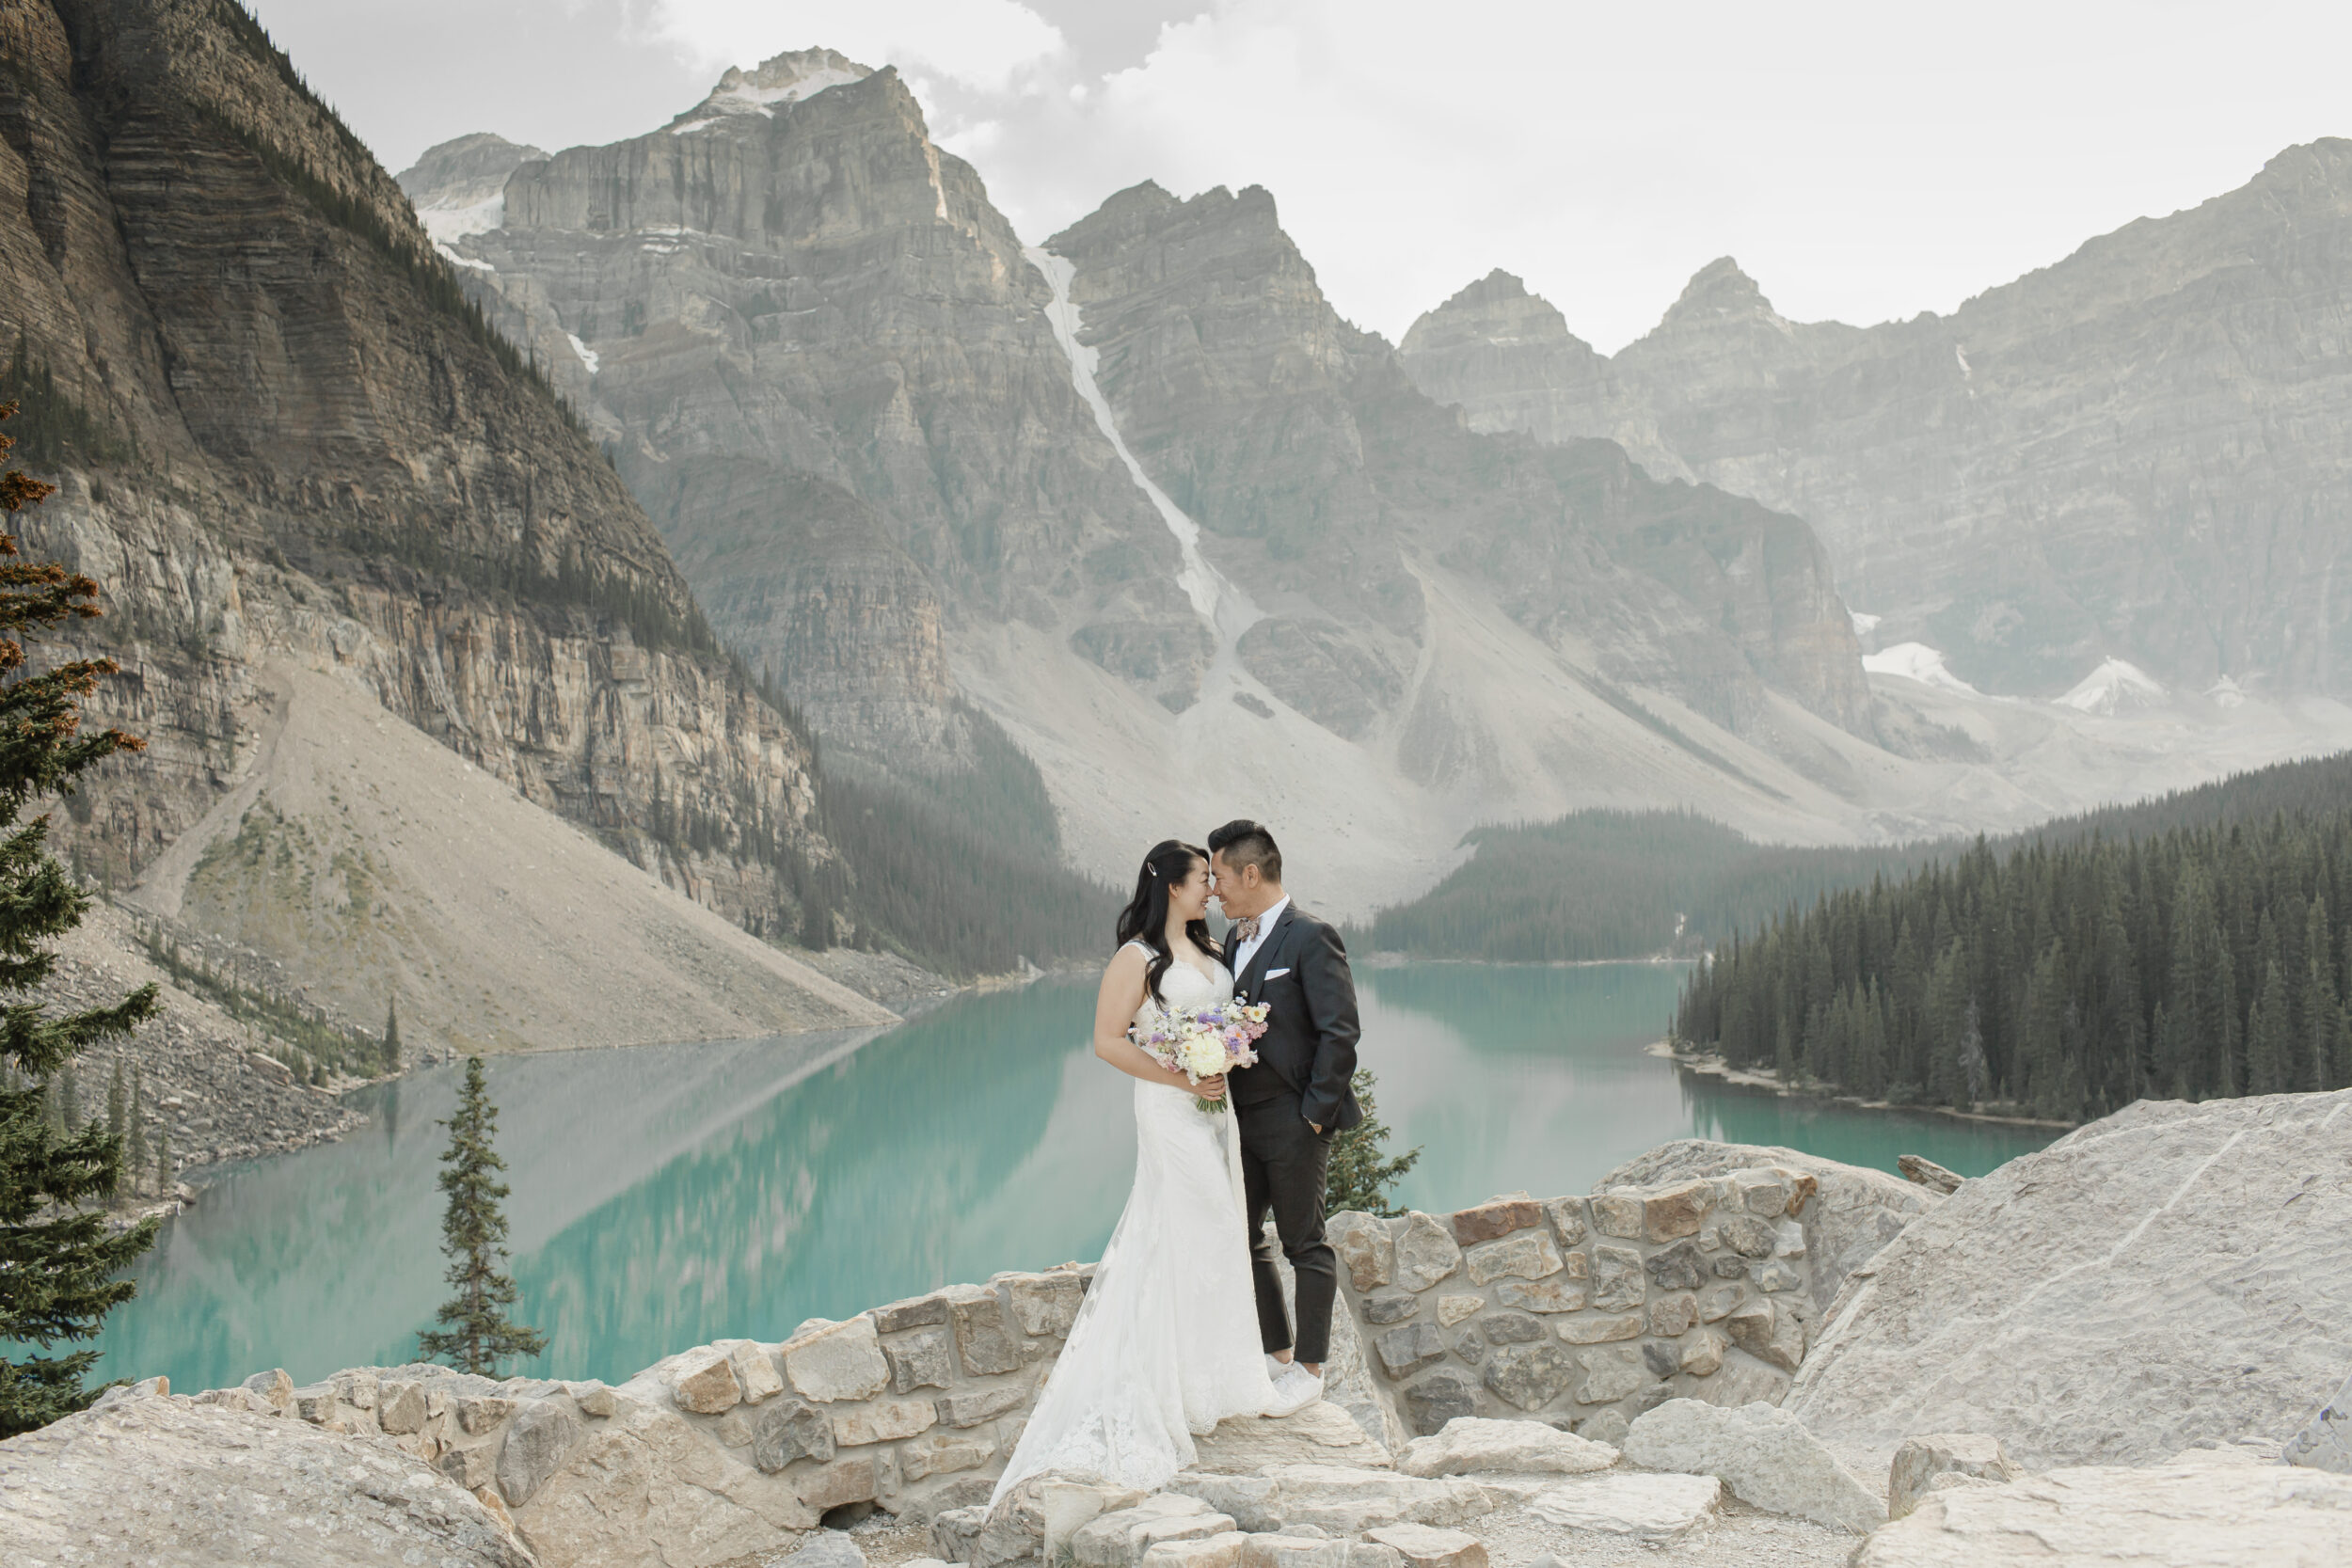 A couple stands in wedding attire near an alpine lake in Banff.